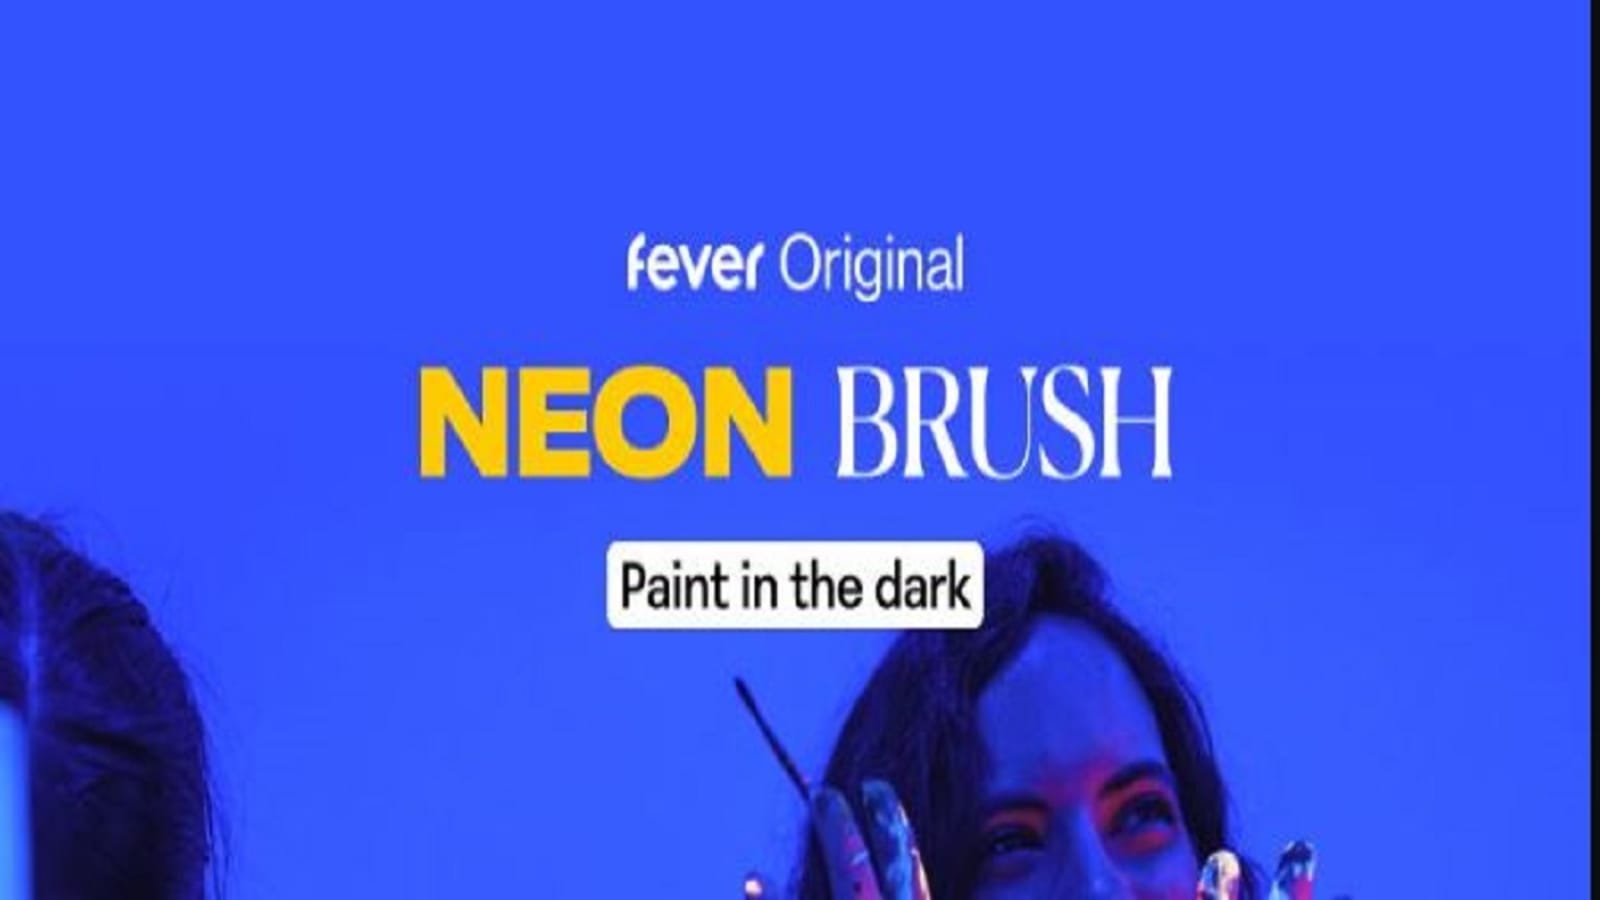 Neon Brush: Sip & Paint Workshop in the Dark